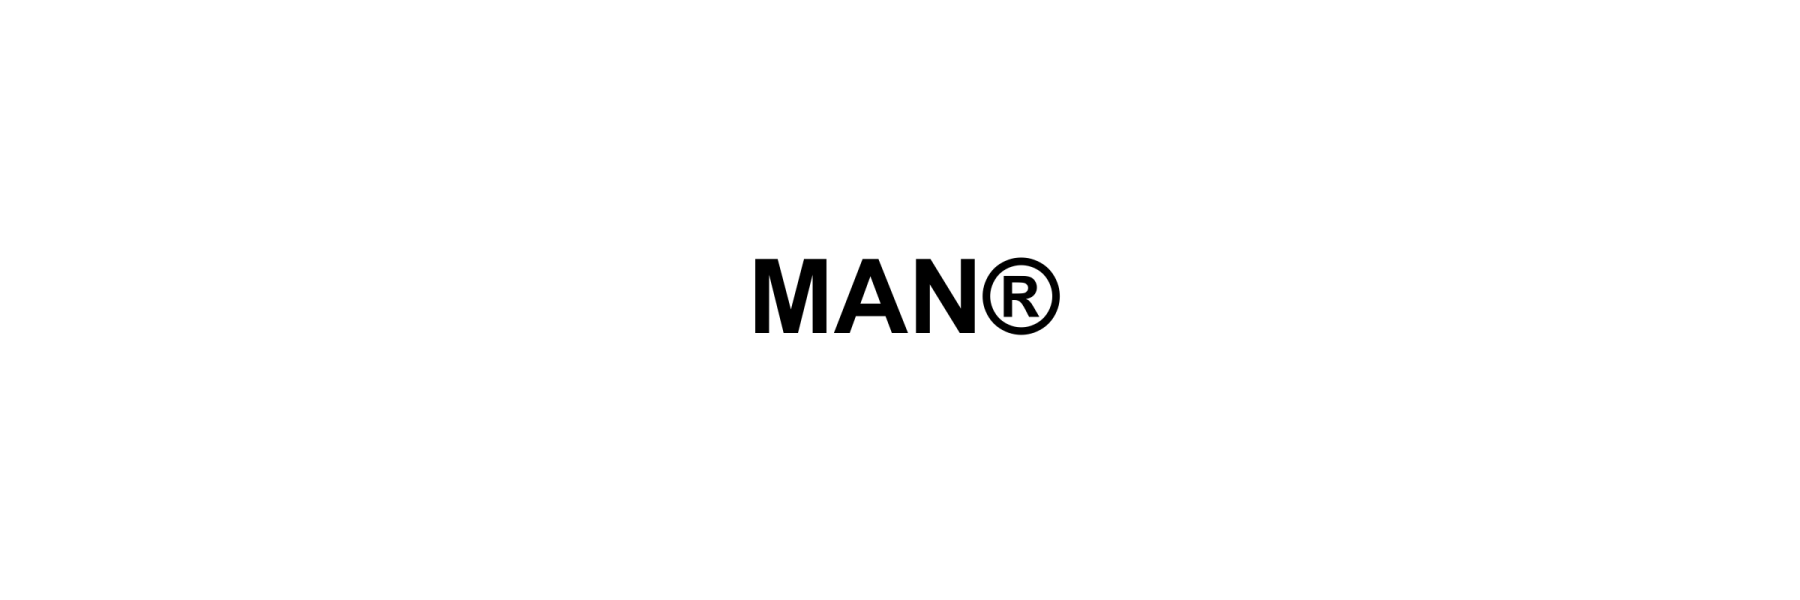 MAN® SE (formerly Maschinenfabrik...